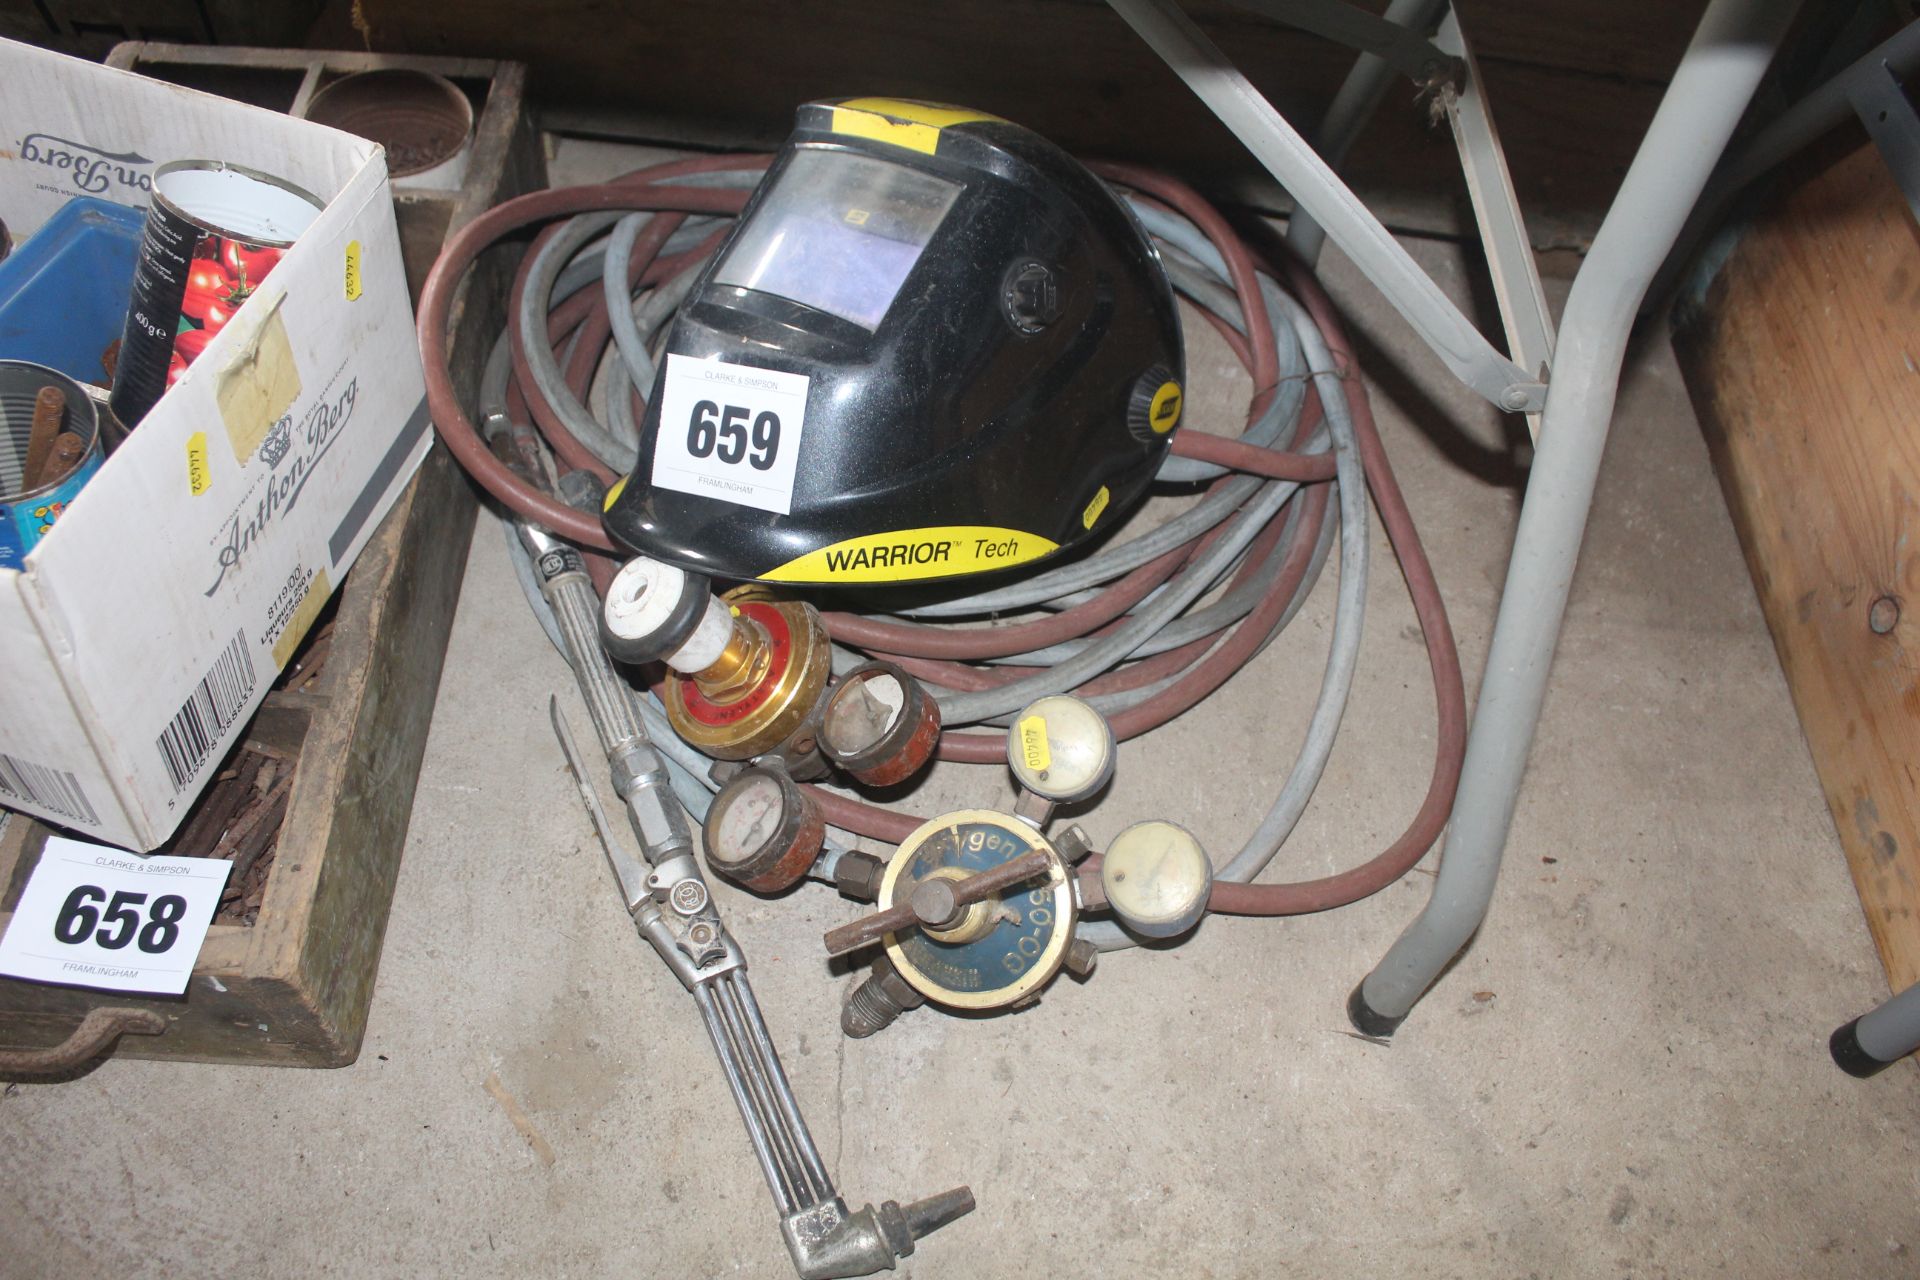 Gas regulators, hoses, welding mask.